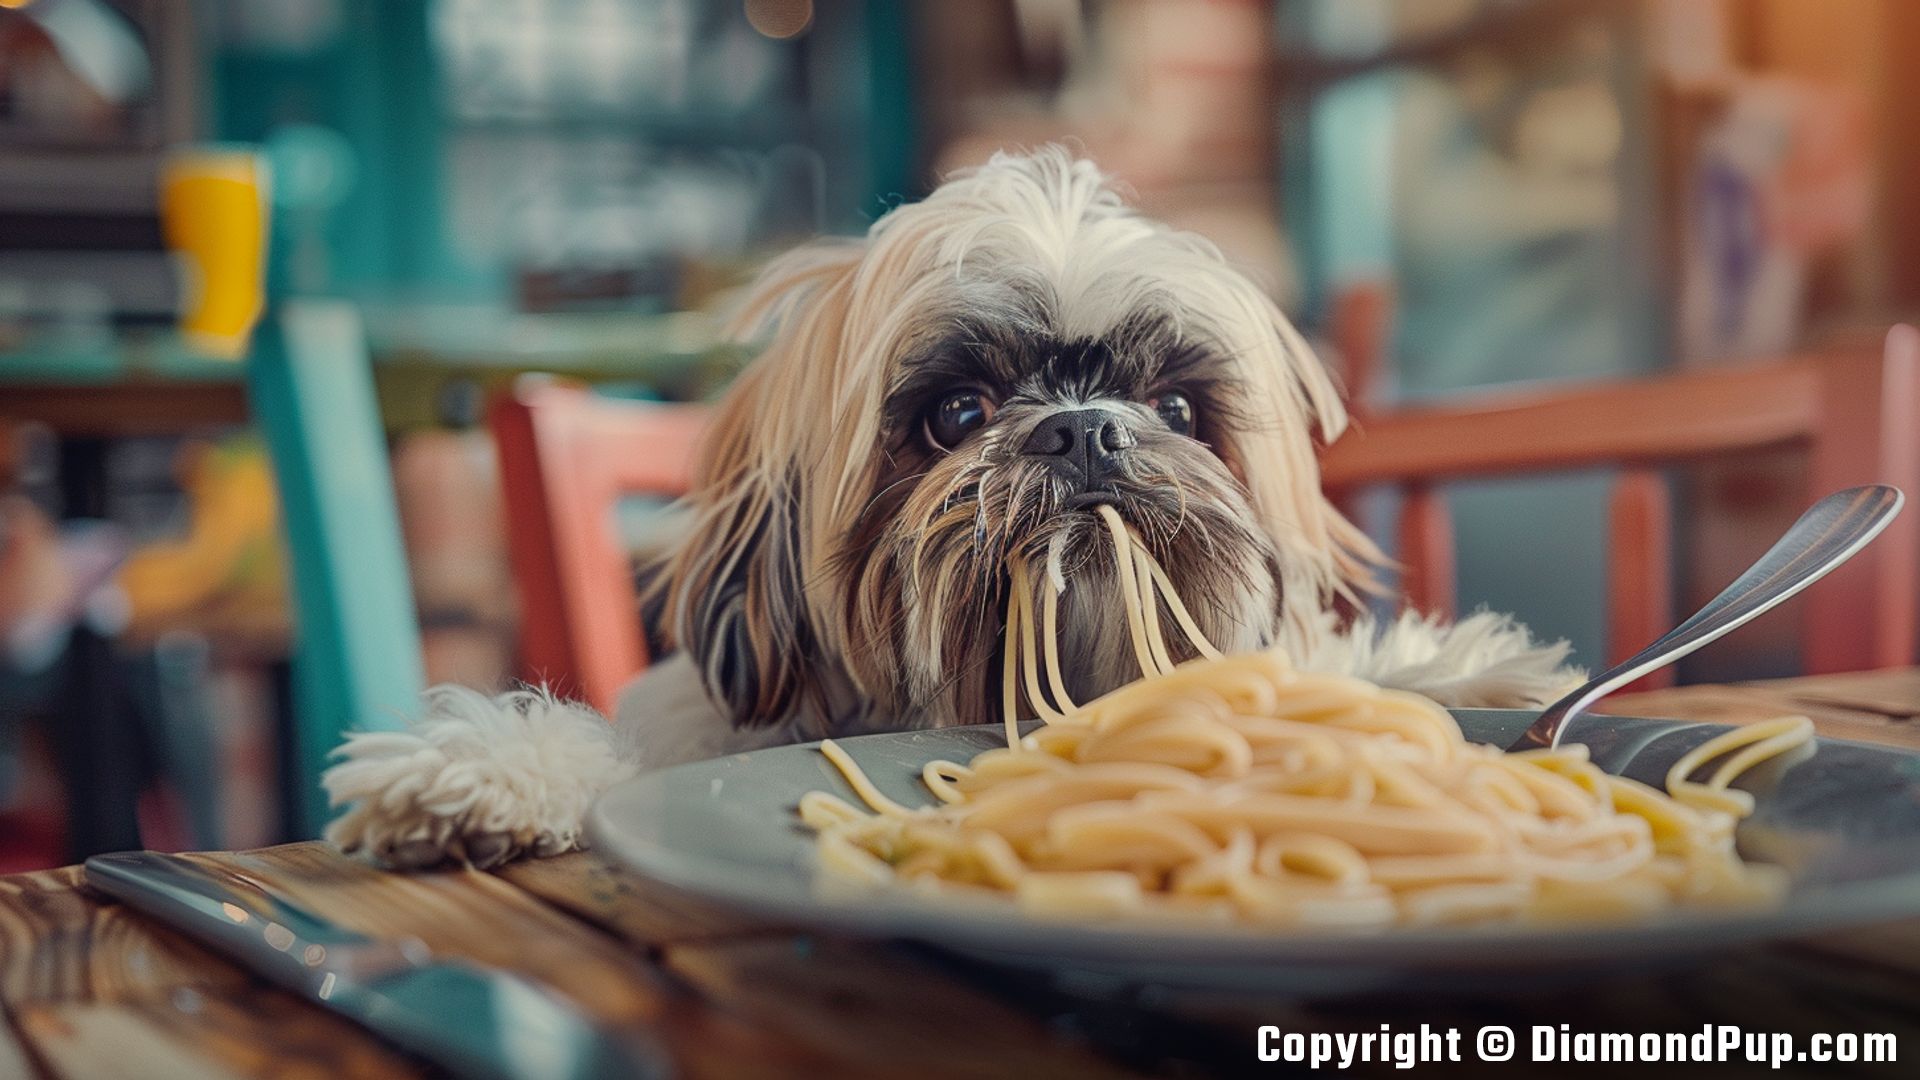 Photograph of an Adorable Shih Tzu Eating Pasta